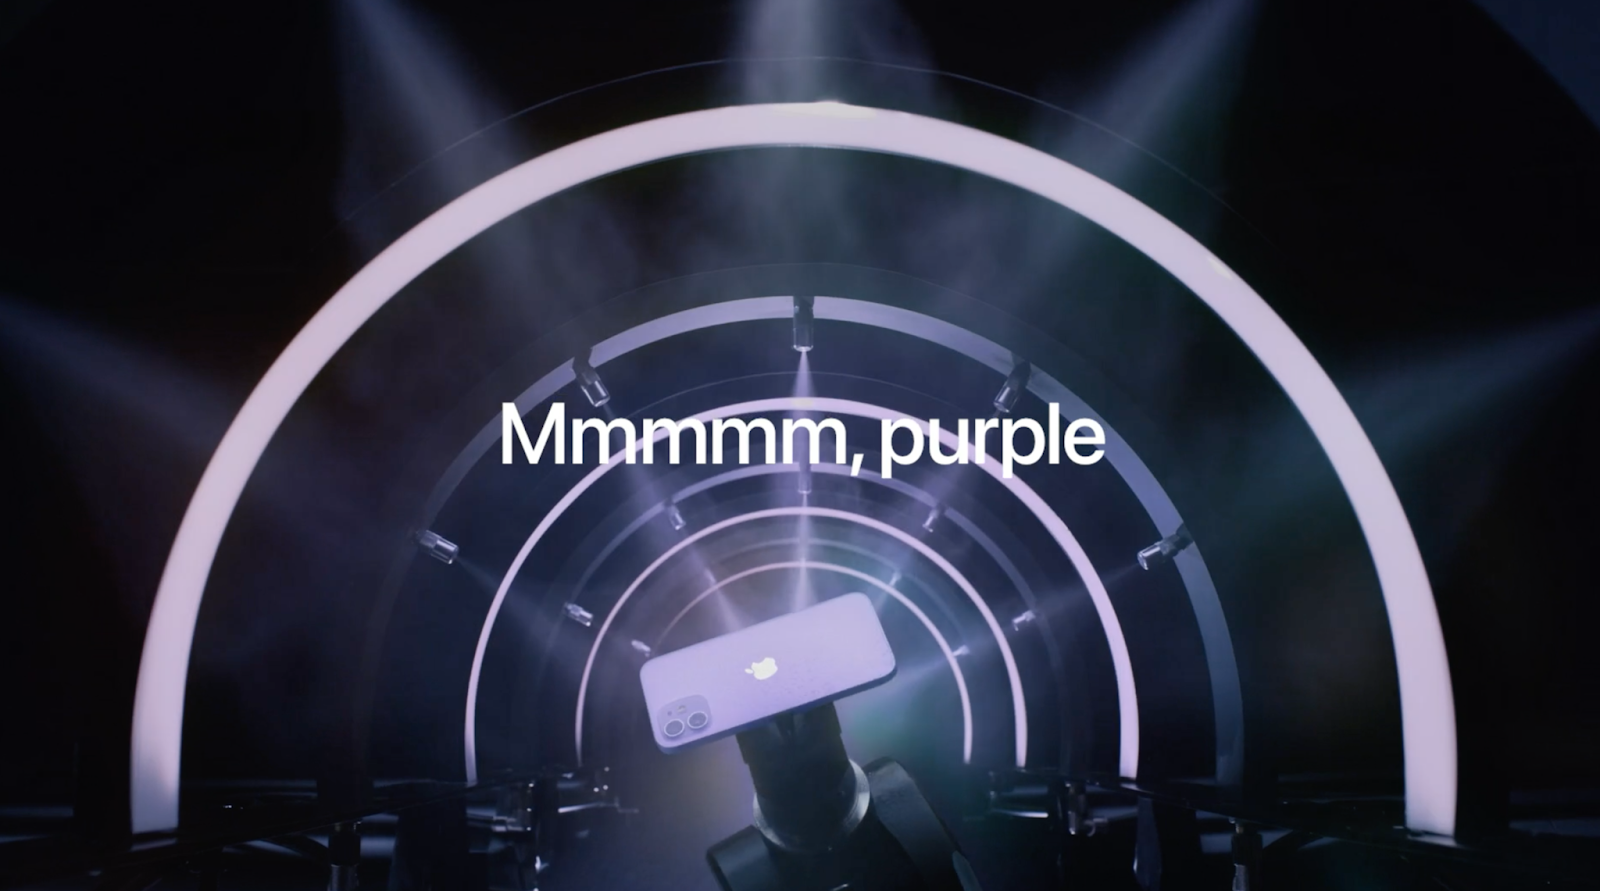 purple iphone 12